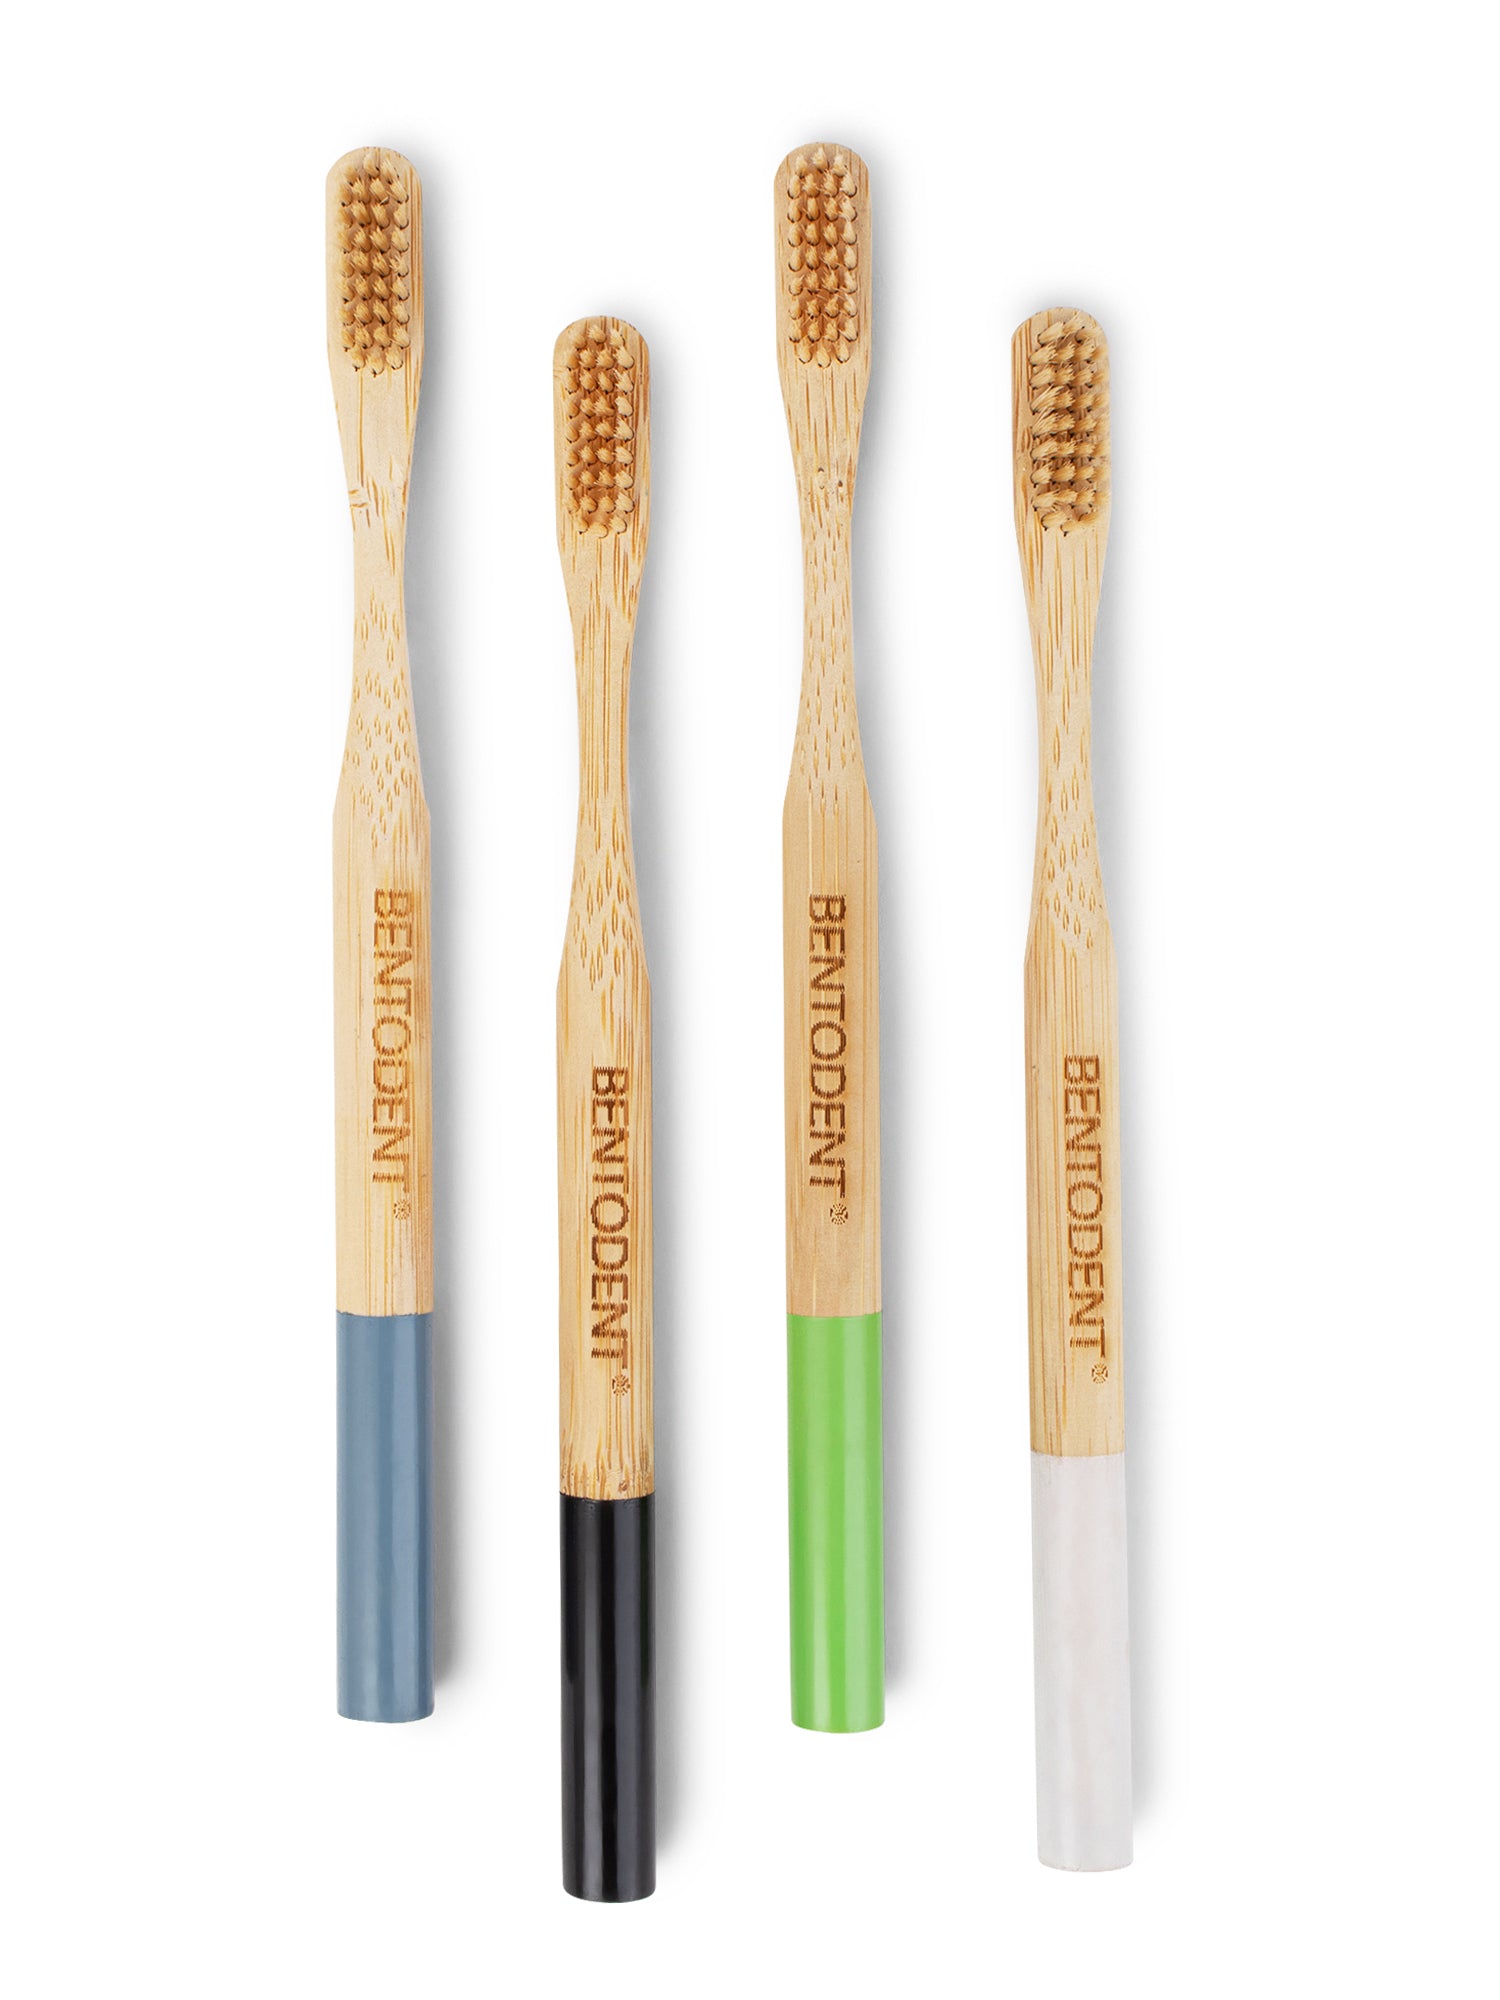 Bentodent Eco Brush Bamboo Toothbrush with Bamboo Fiber Bristles Round Bottom Teeth Whitening Ultra Soft (Pack of 4) - Indian Dental Organization